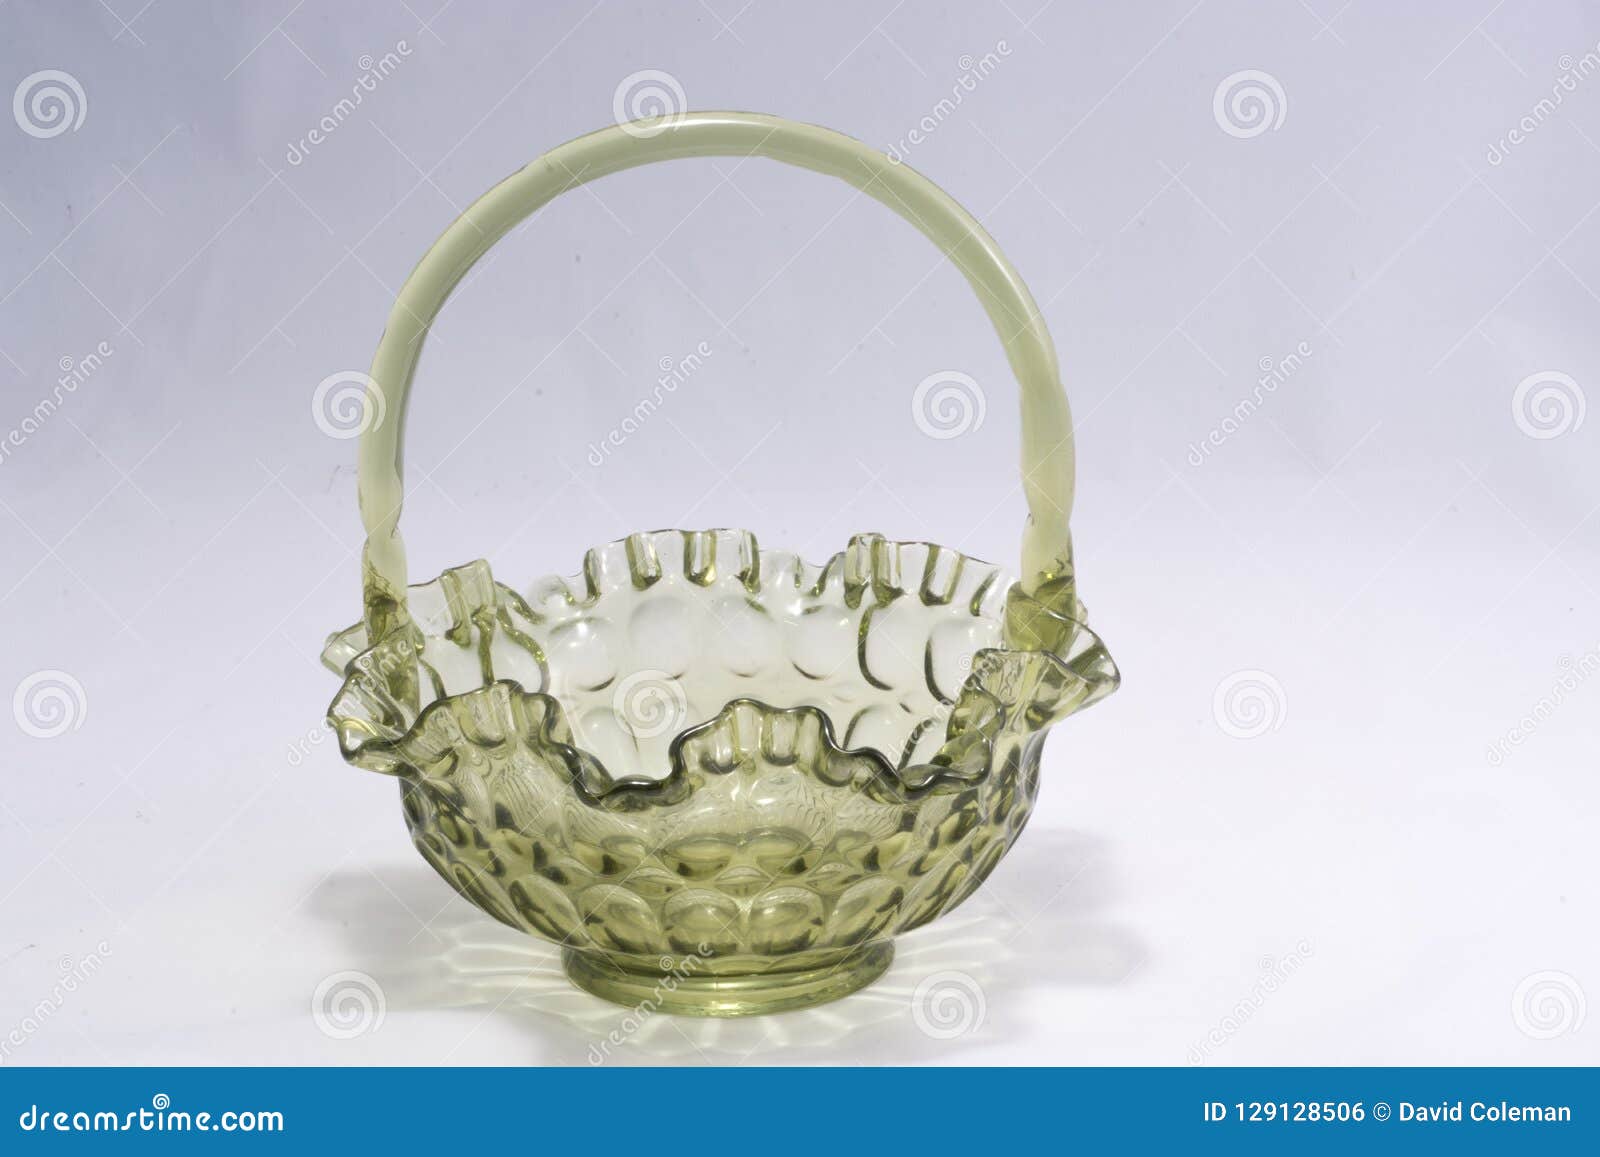 green blown glass basket